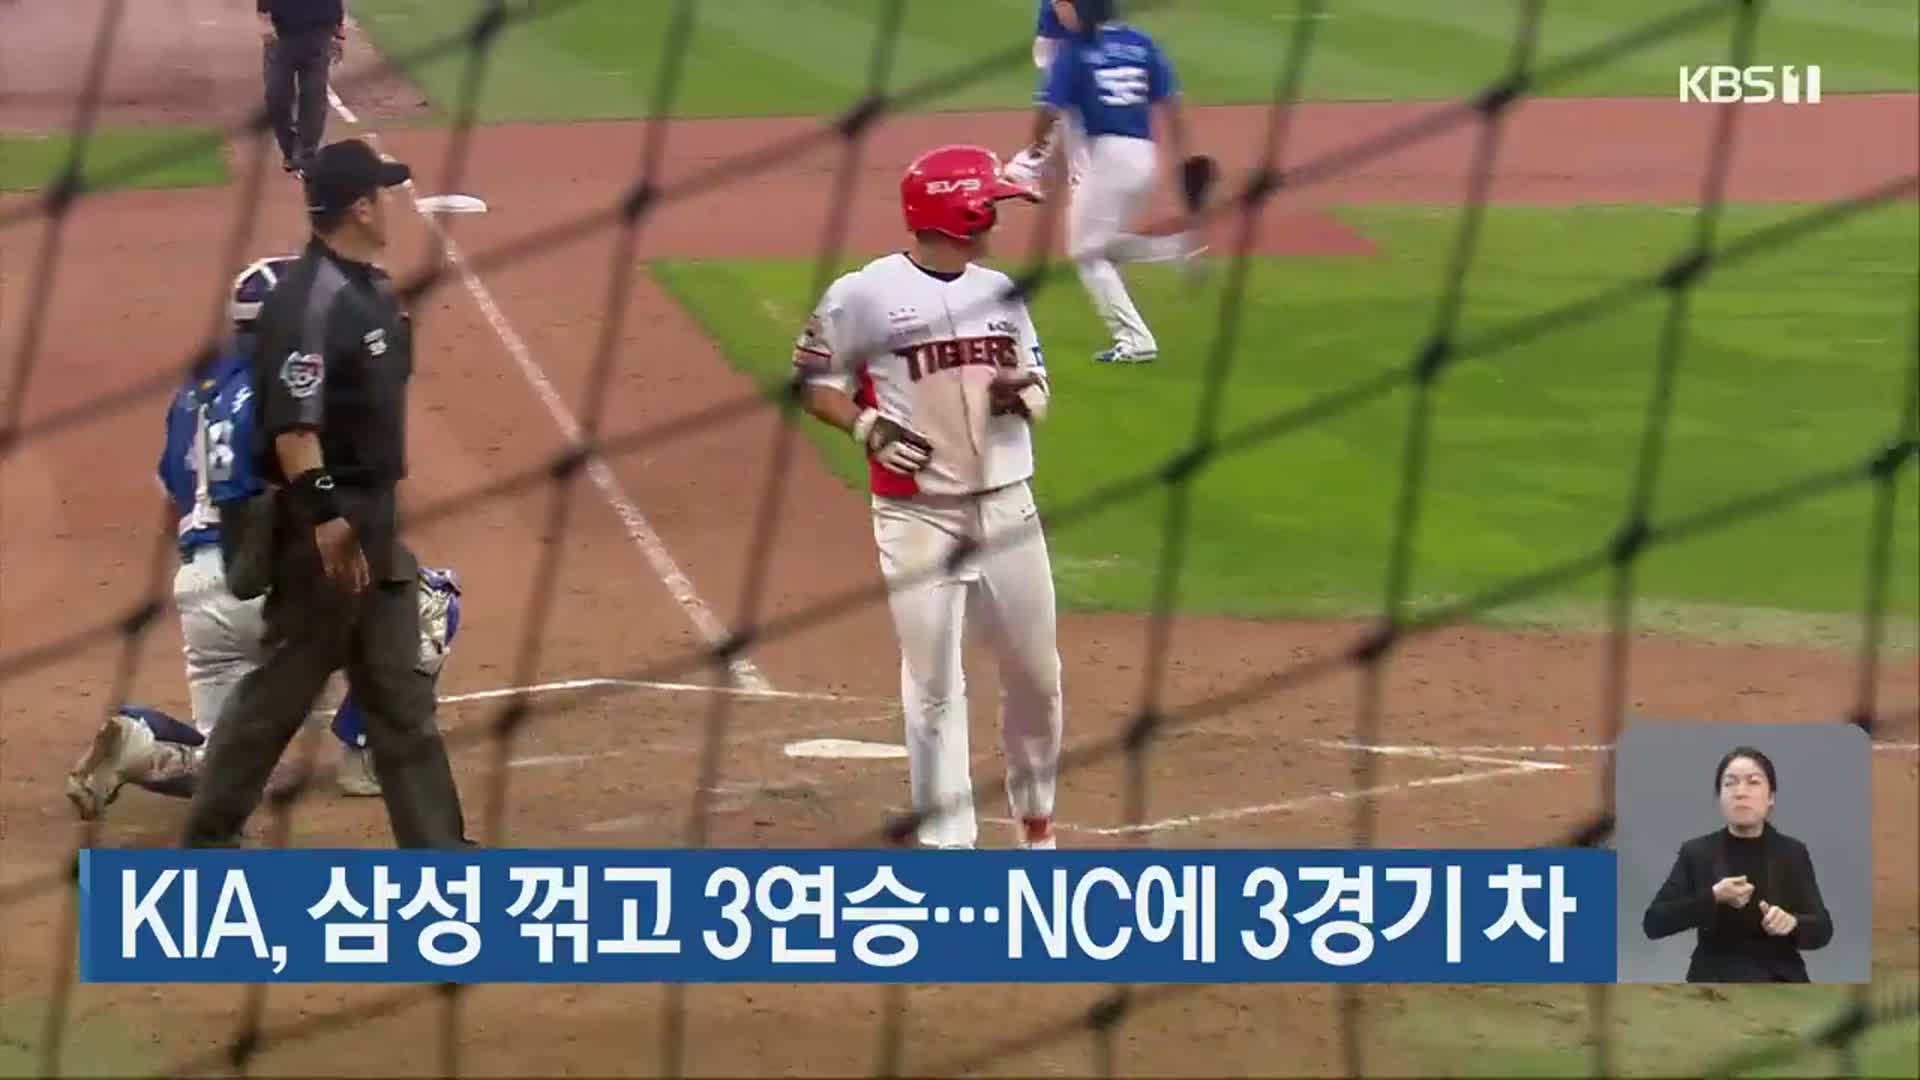 KIA, 삼성 꺾고 3연승…NC에 3경기 차